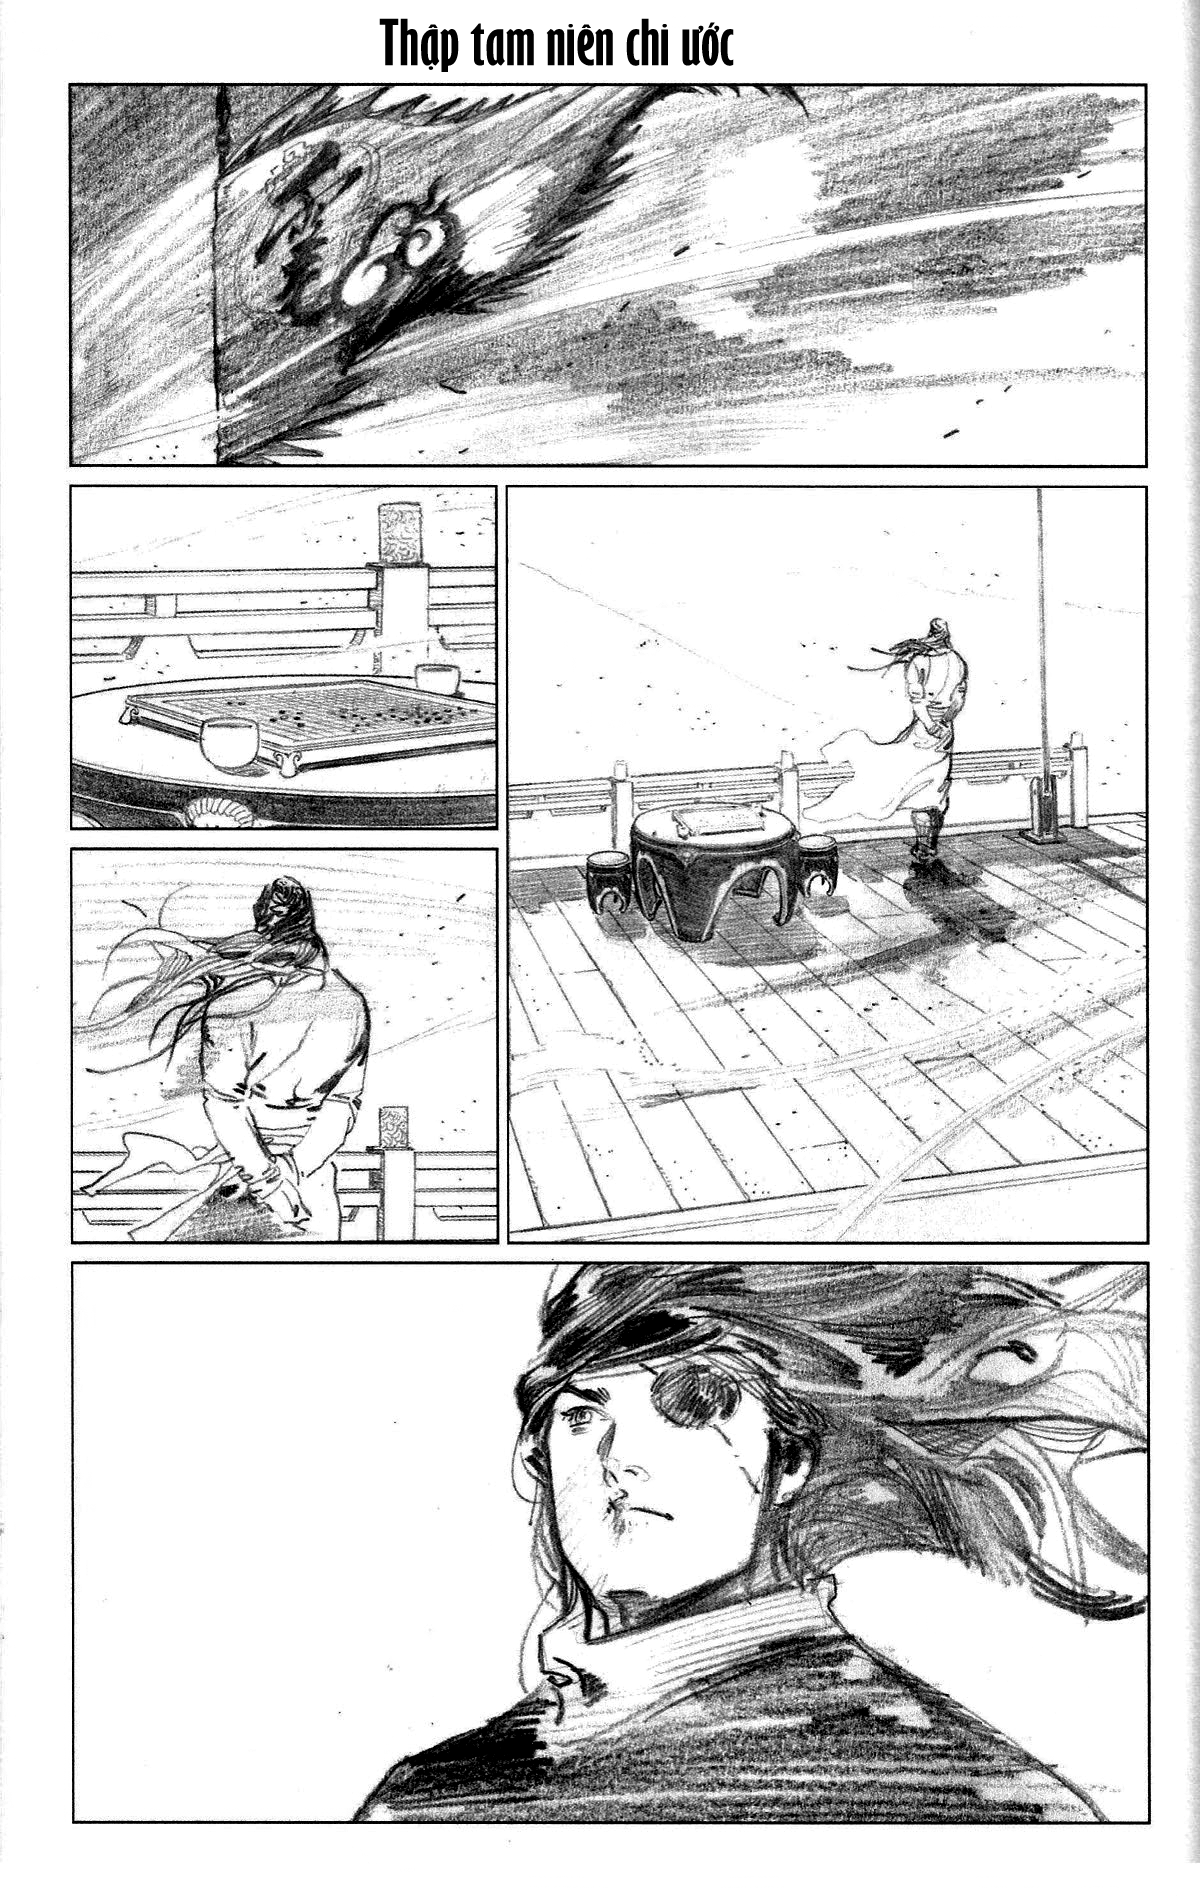 Phong Vân chap 675 (tựa mỗi trang) trang 58